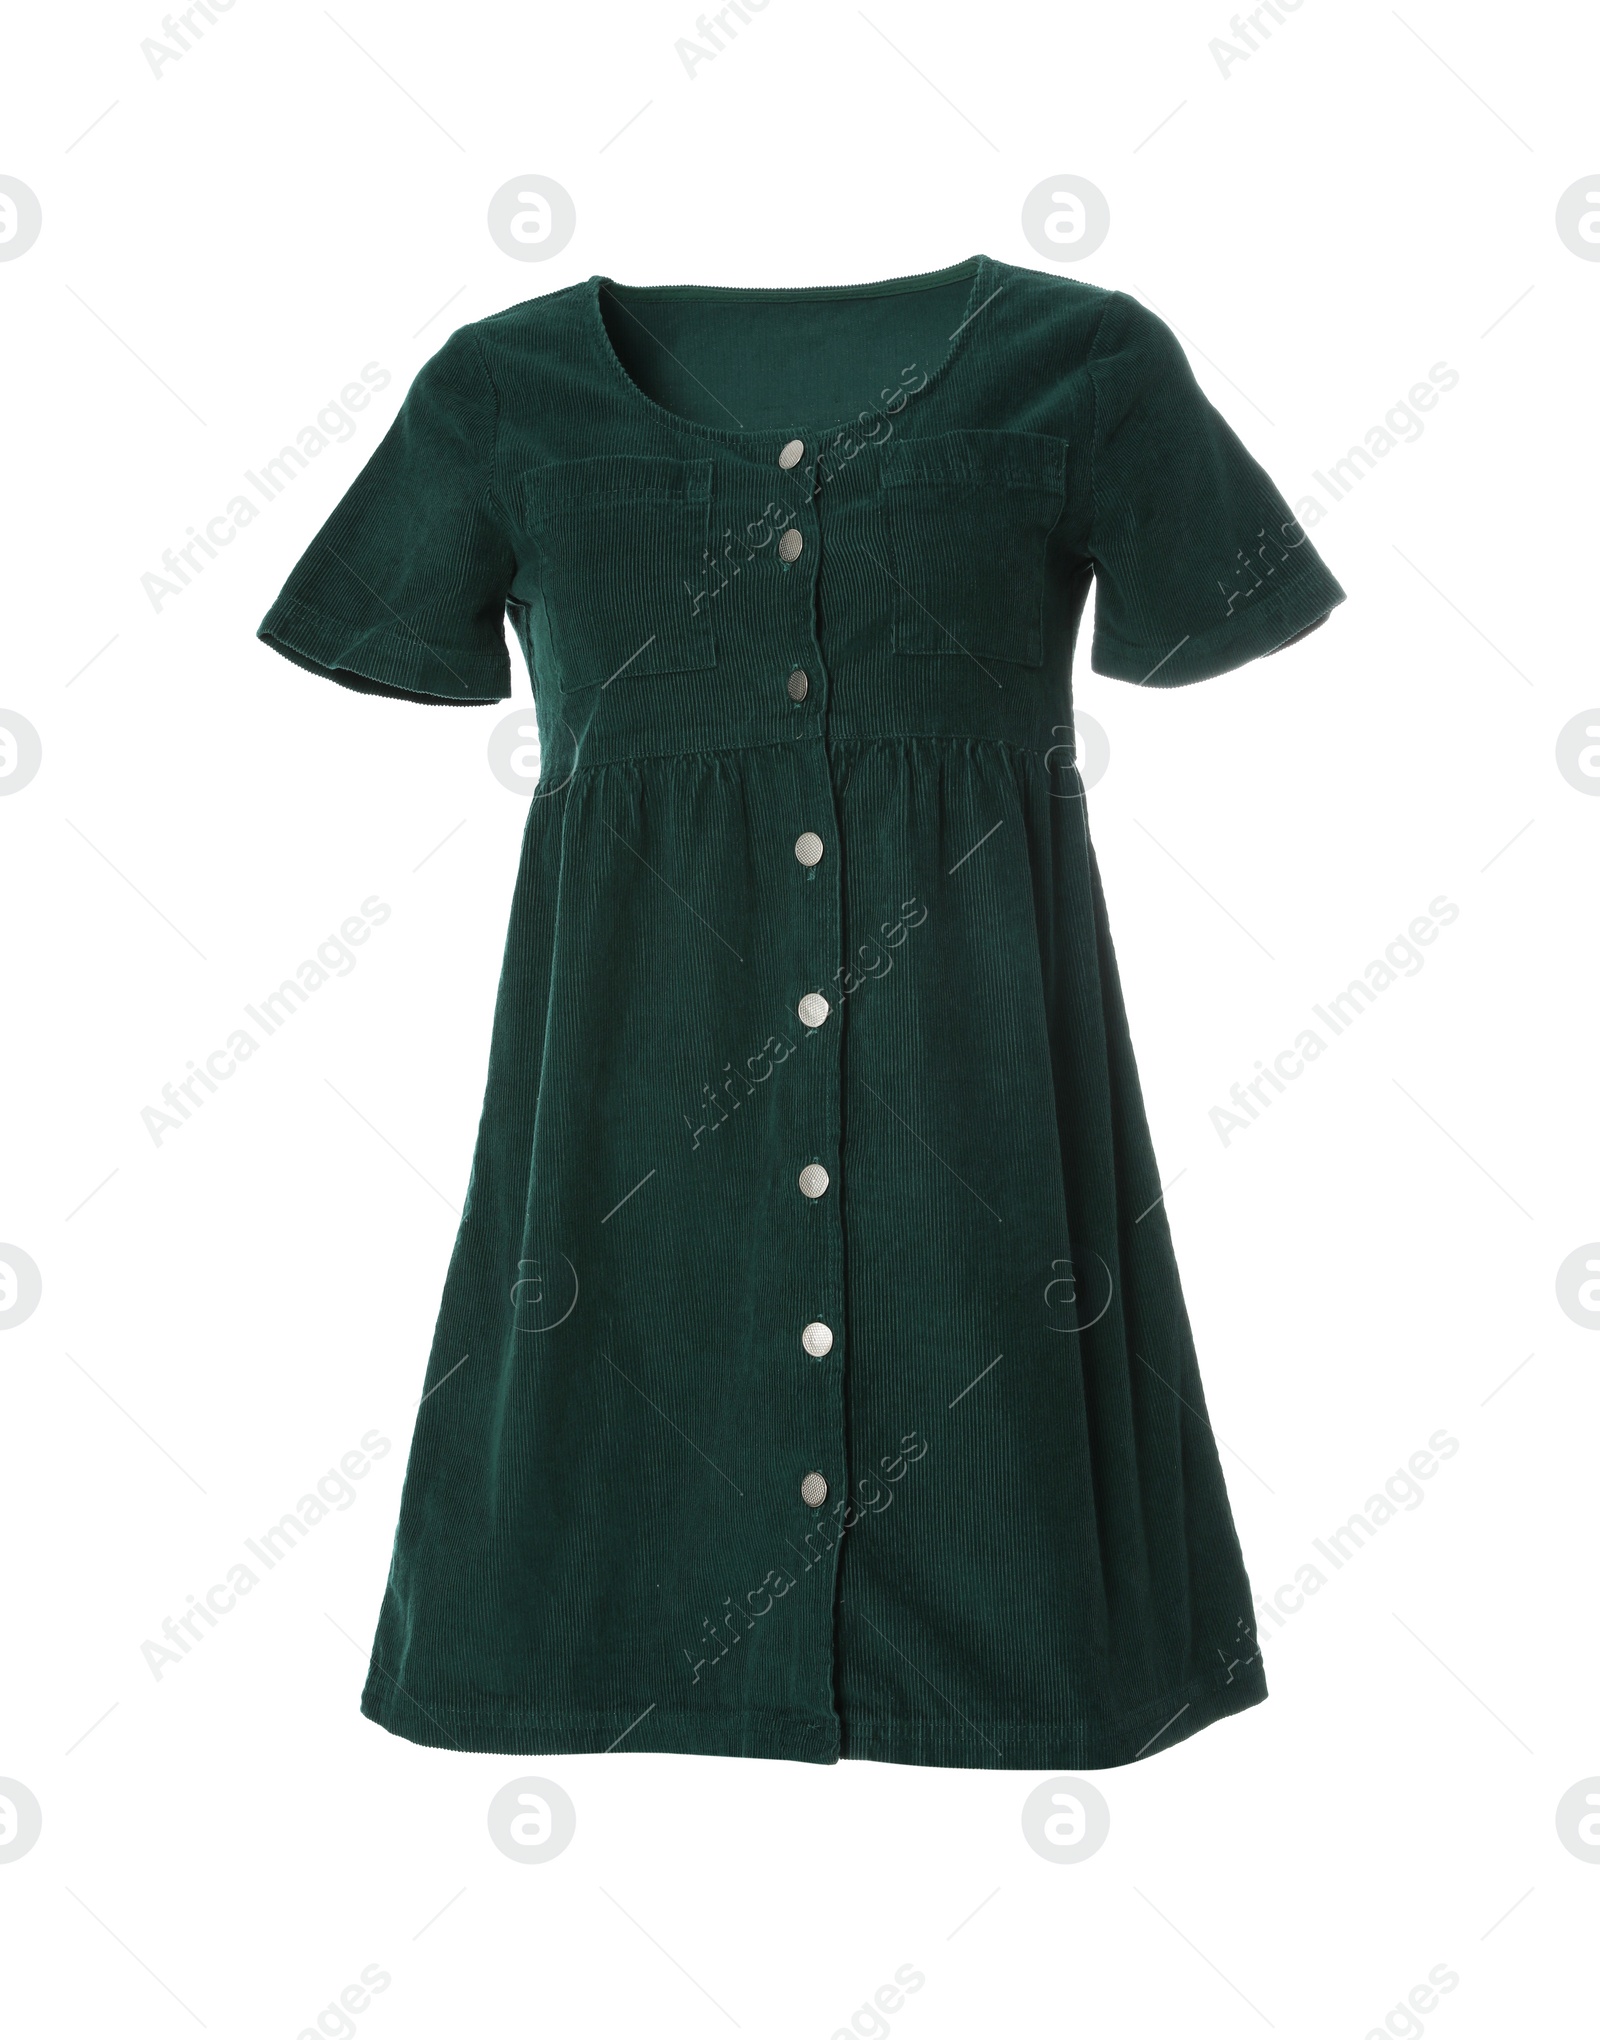 Photo of Stylish short dark green velour dress on white background